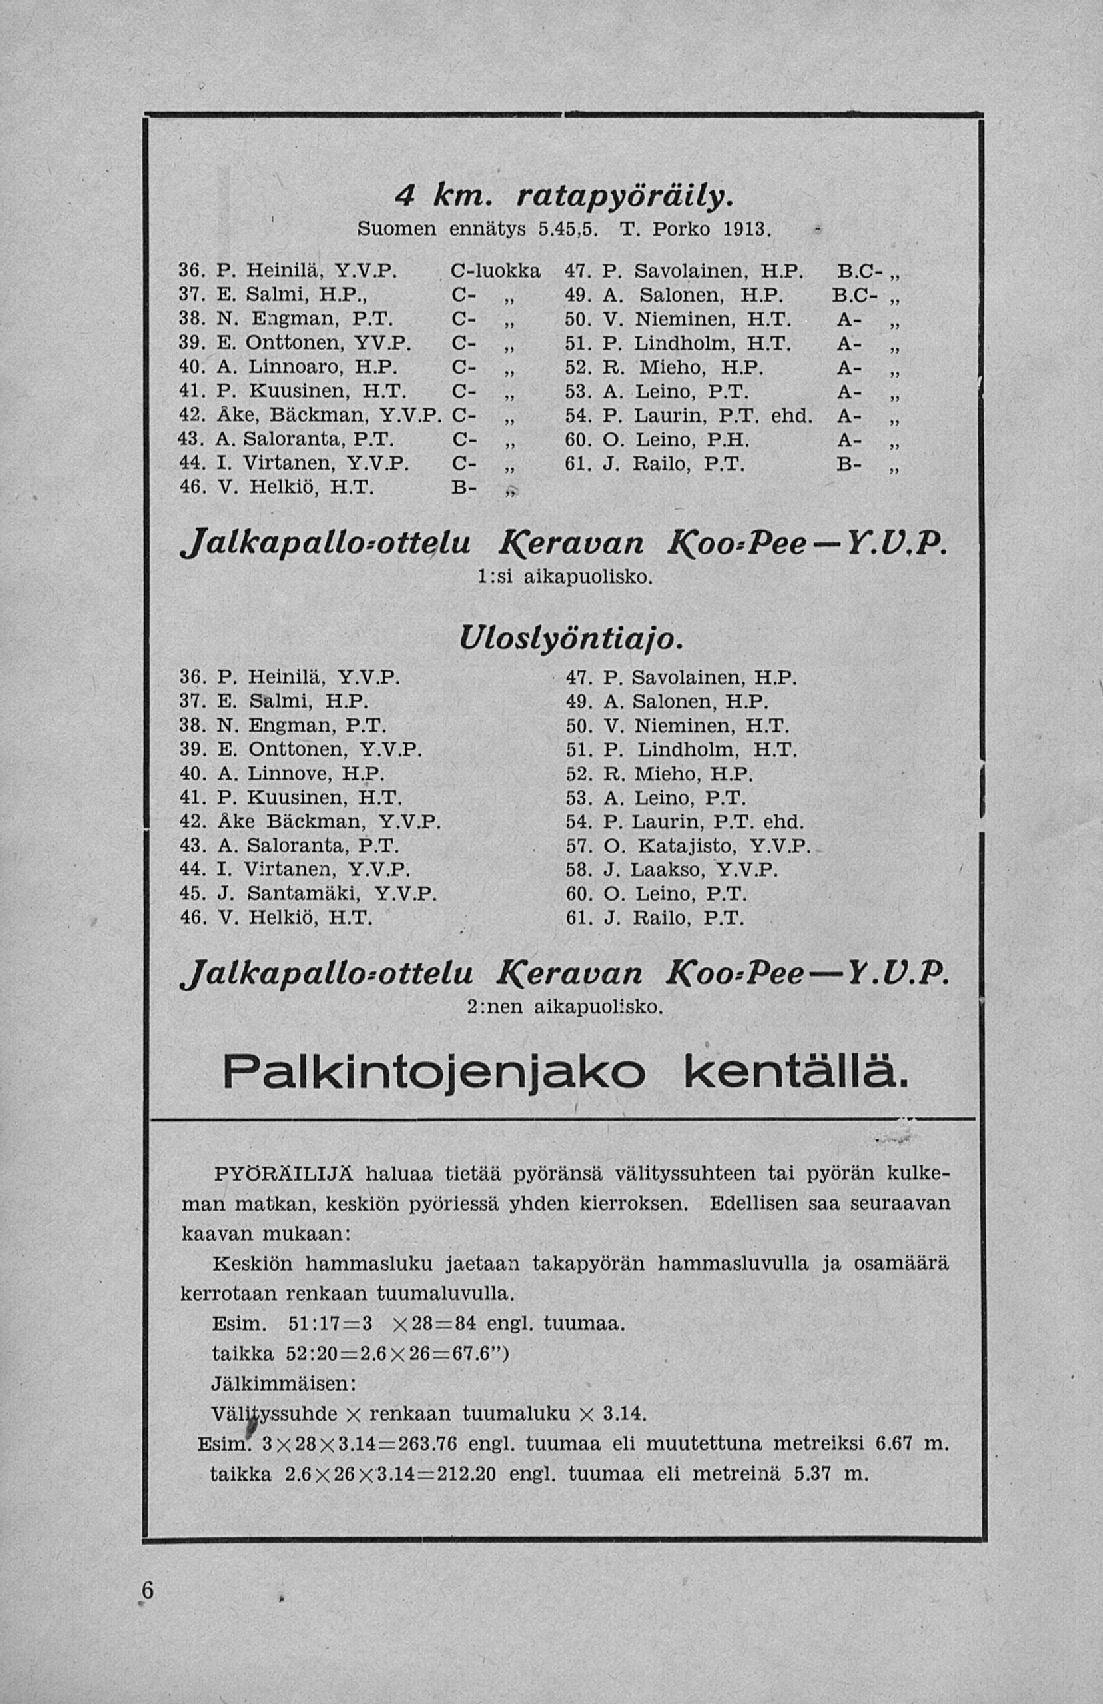 4 km. ratapyöräily. Suomen ennätys 5.45,5. T. Porko 1913. 36. P. Heinilä, Y.V.P. C-luokka 37. E. Salmi, H.P., C- 38. N. Engman, P.T. C- -39. E. Onttonen, VV.P. C- -40. A. Linnoaro, H.P. C- -41. P. Kuusinen, H.